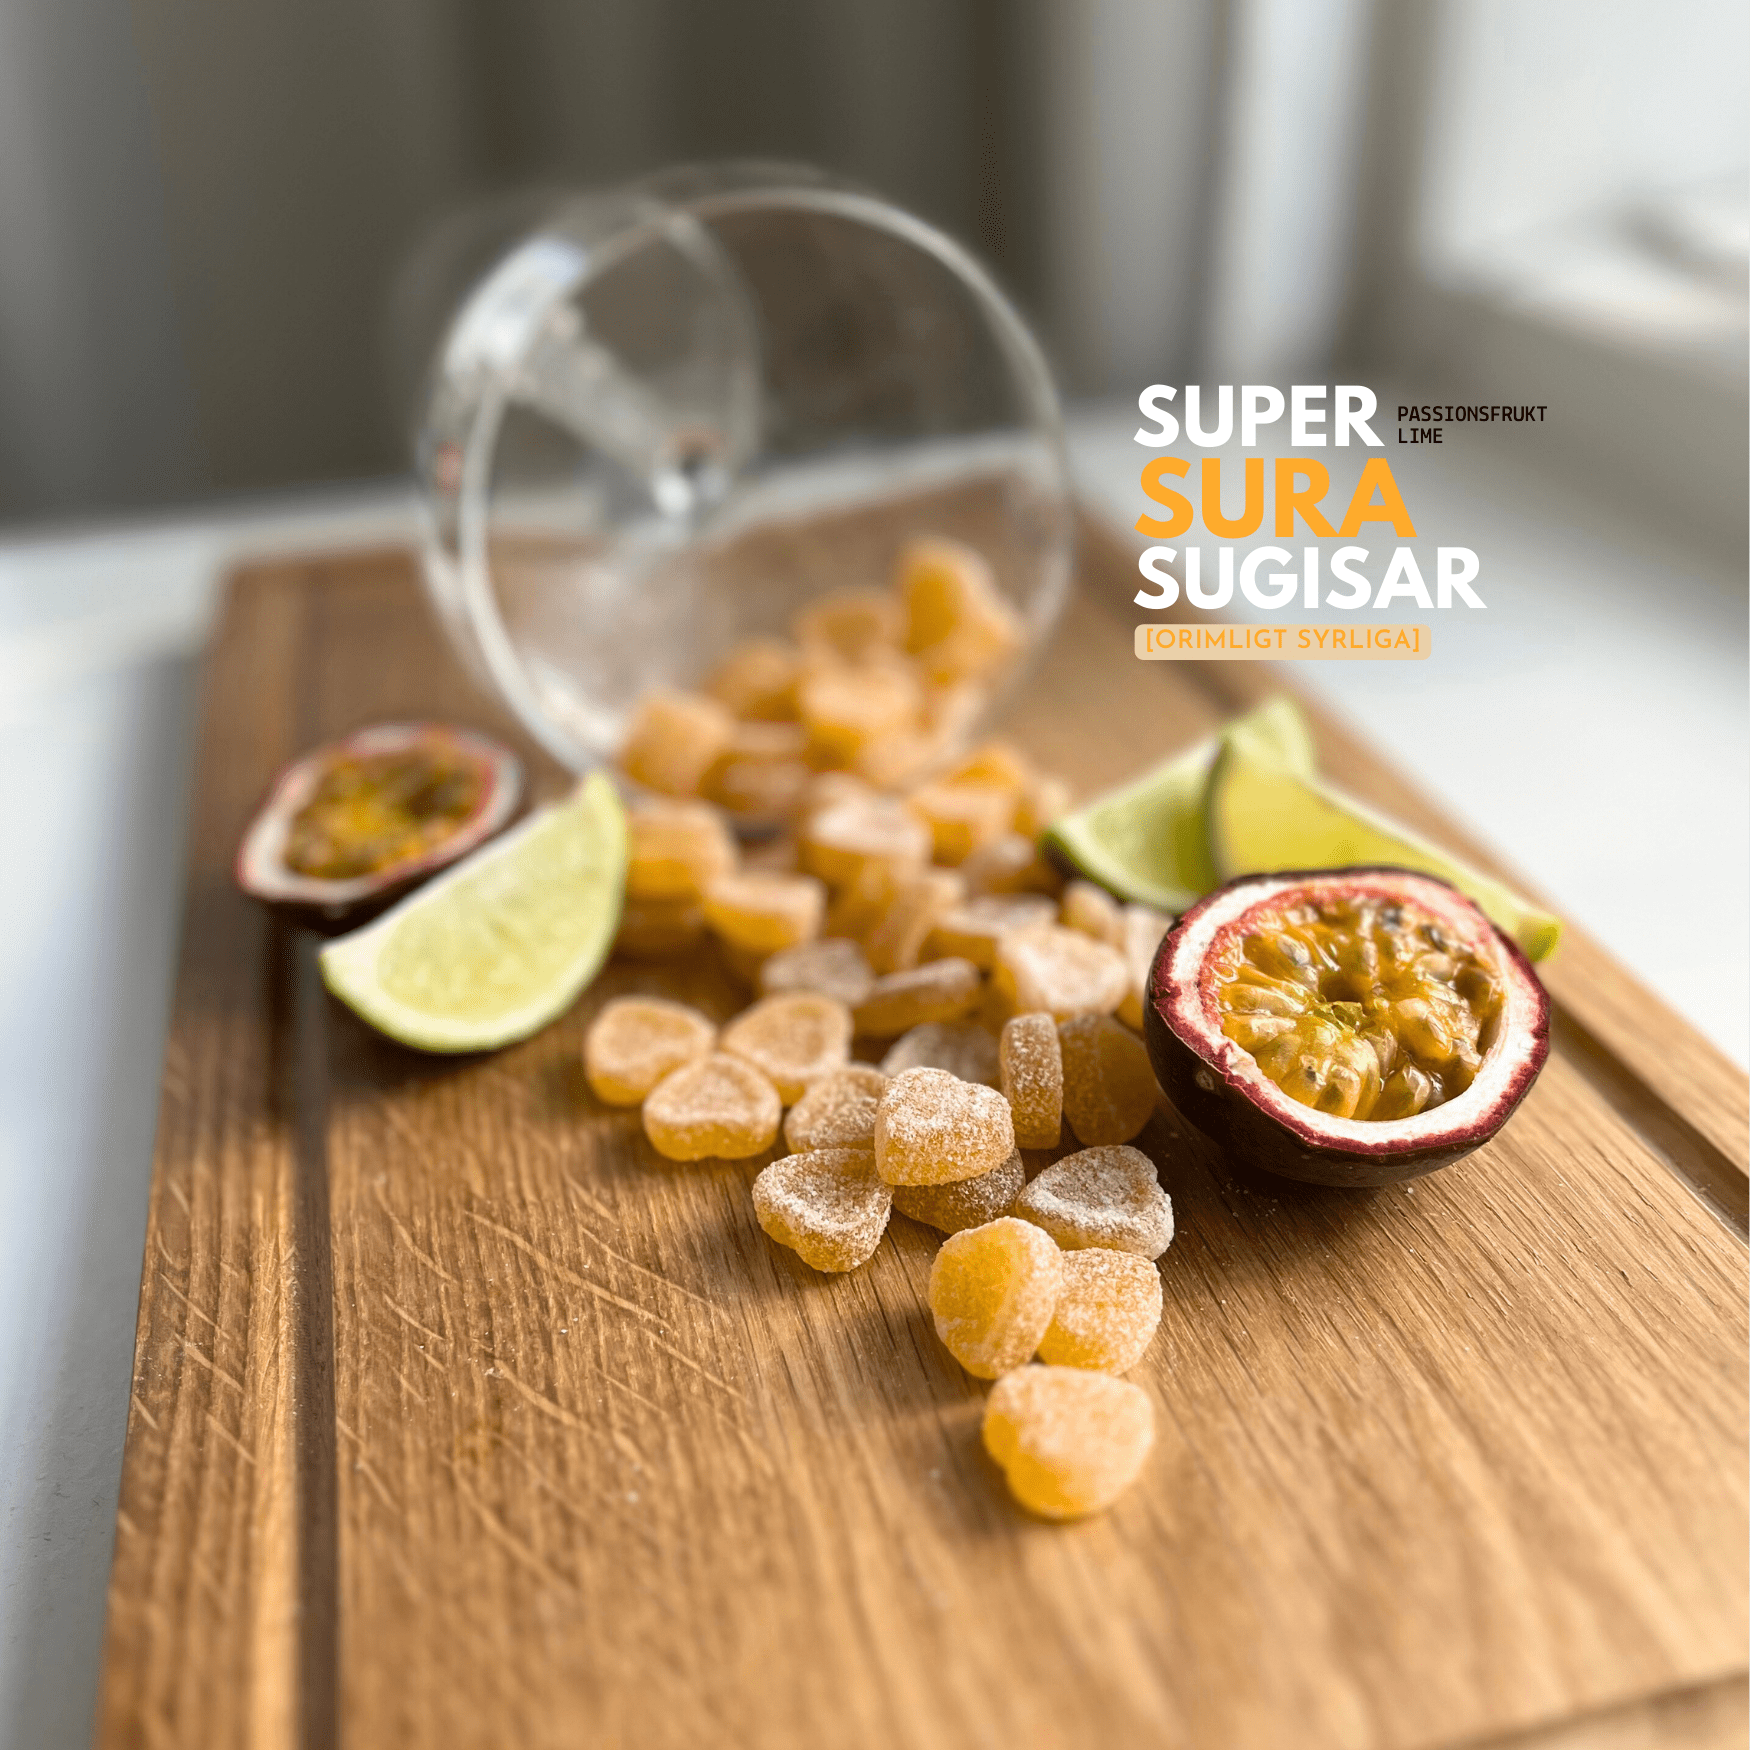 SuperSura sugisar - Pastillfabriken